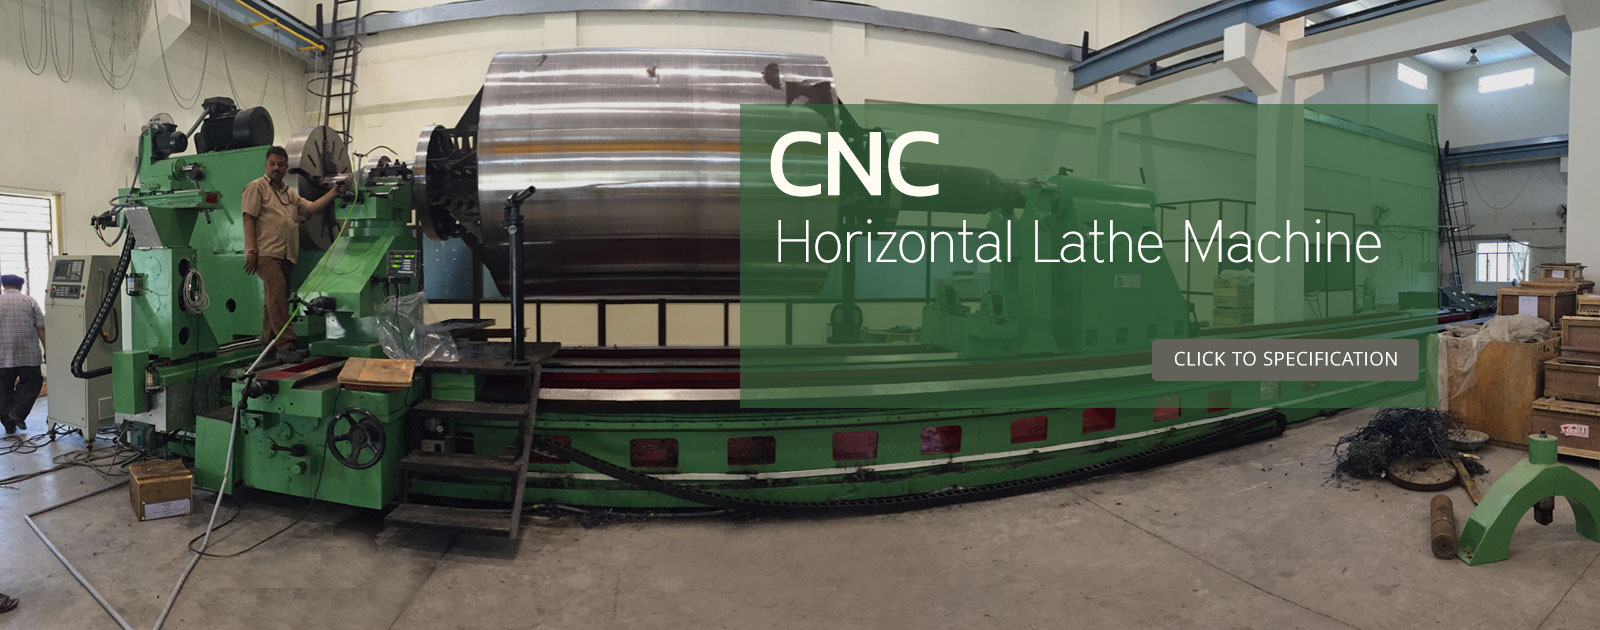 cnc horizontal lathe machine